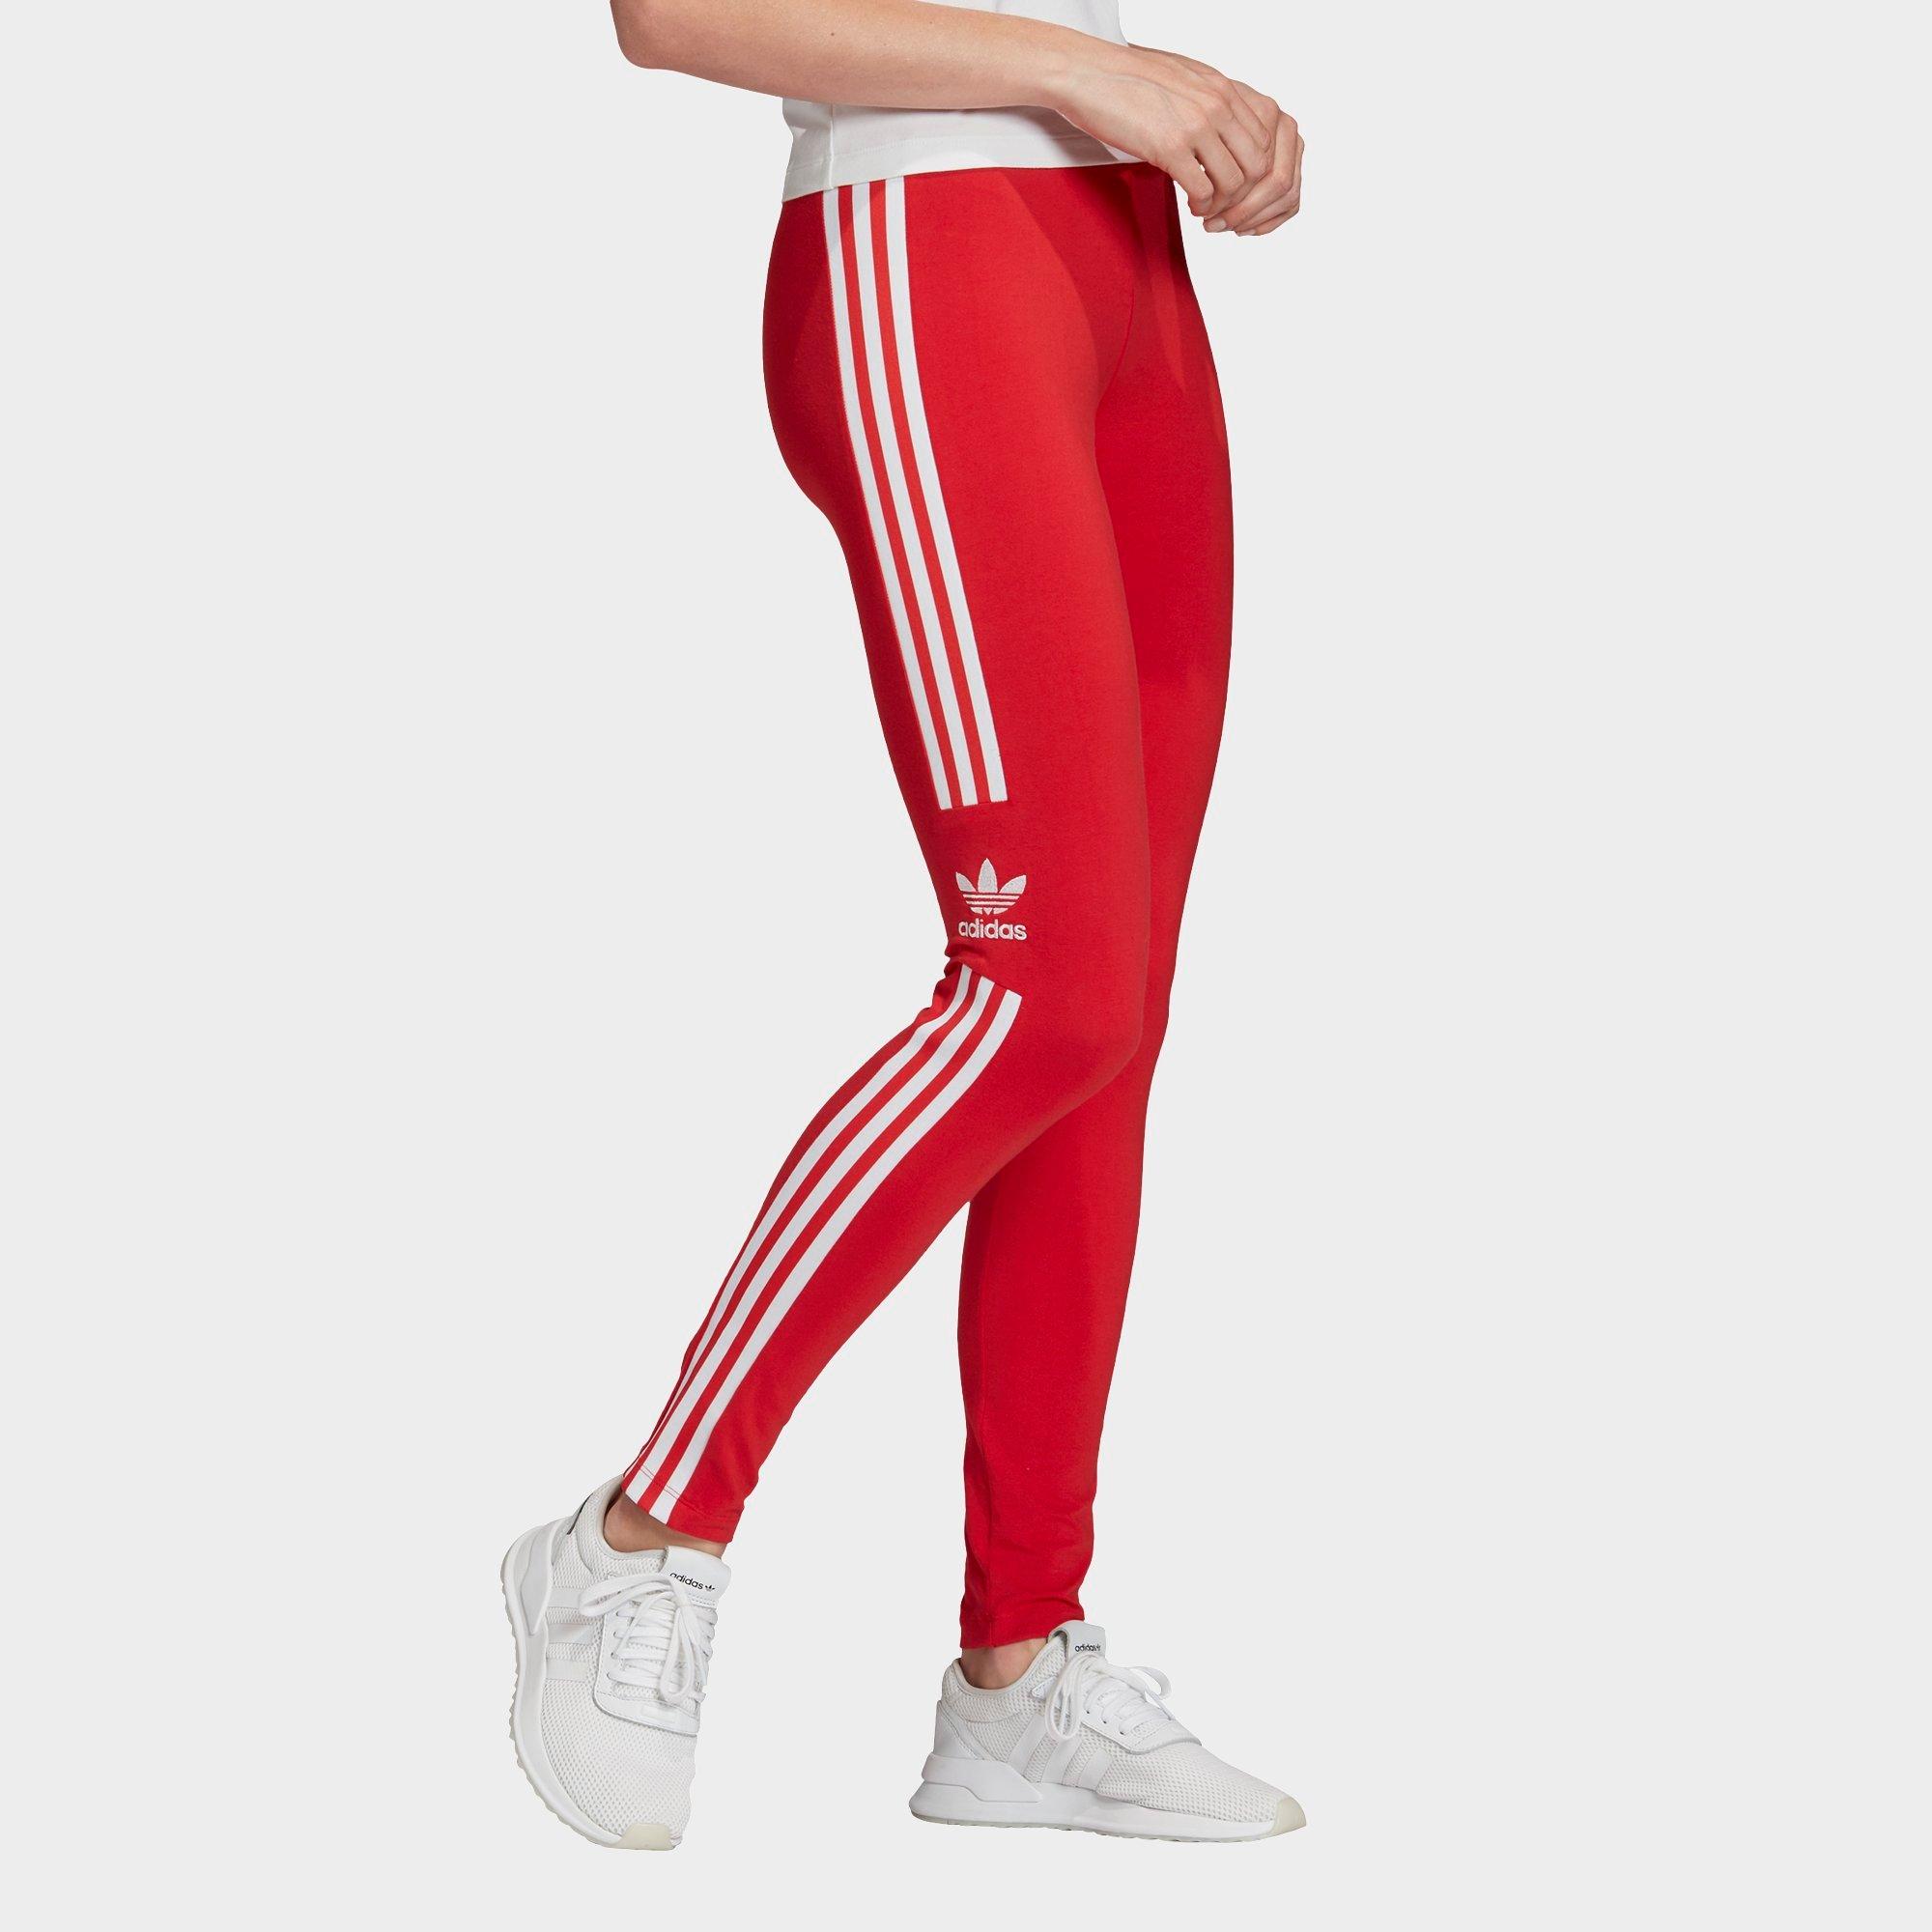 jd sports womens adidas leggings